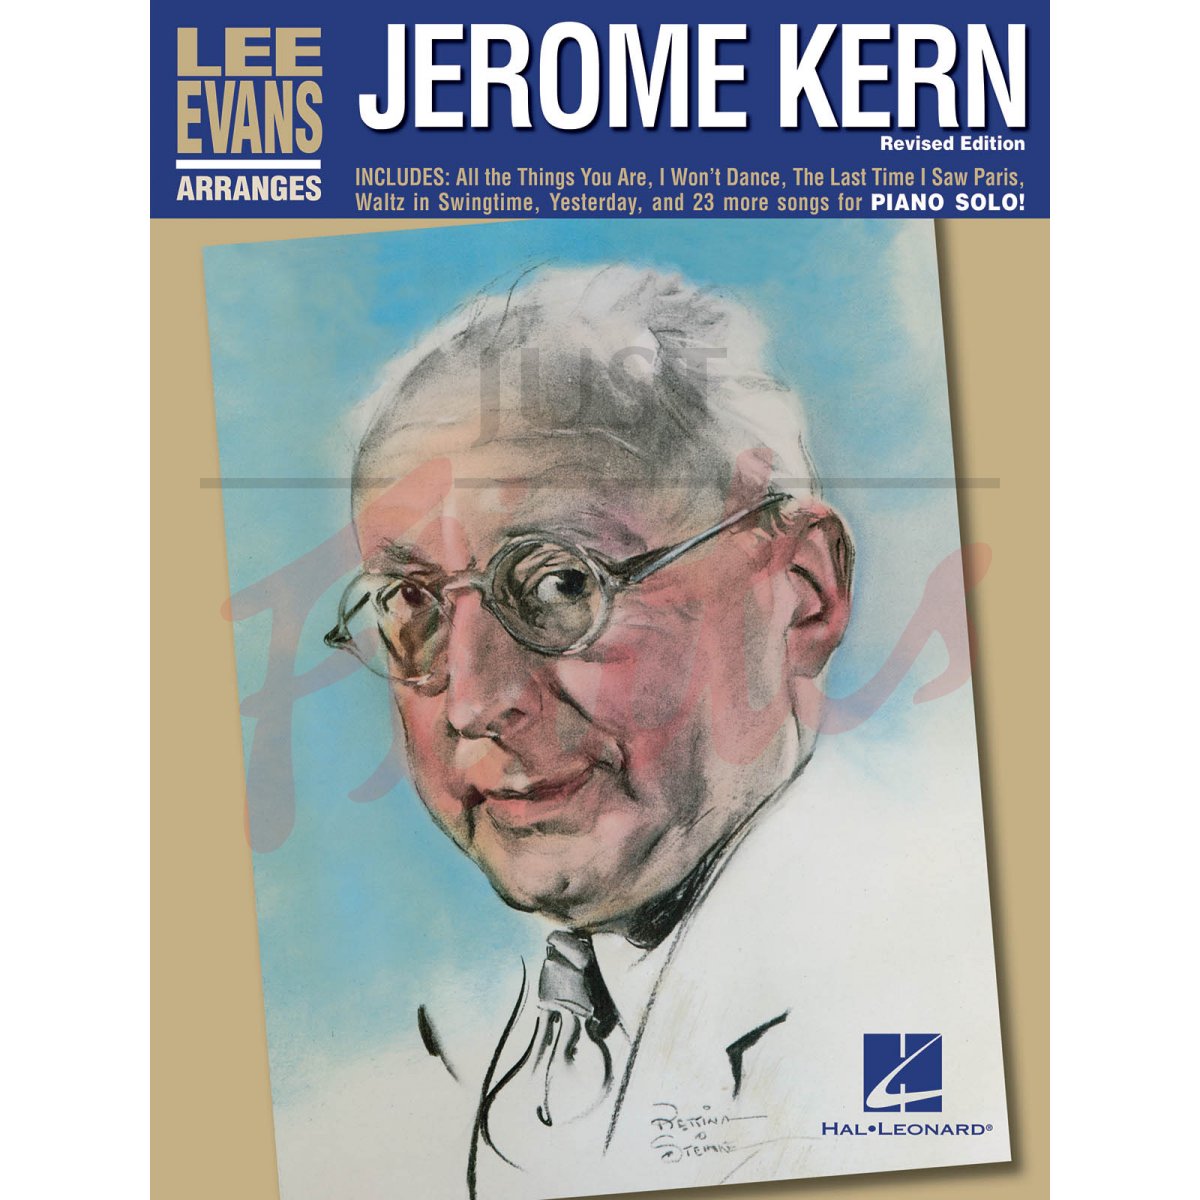 Lee Evans Arranges Jerome Kern for Piano Solo